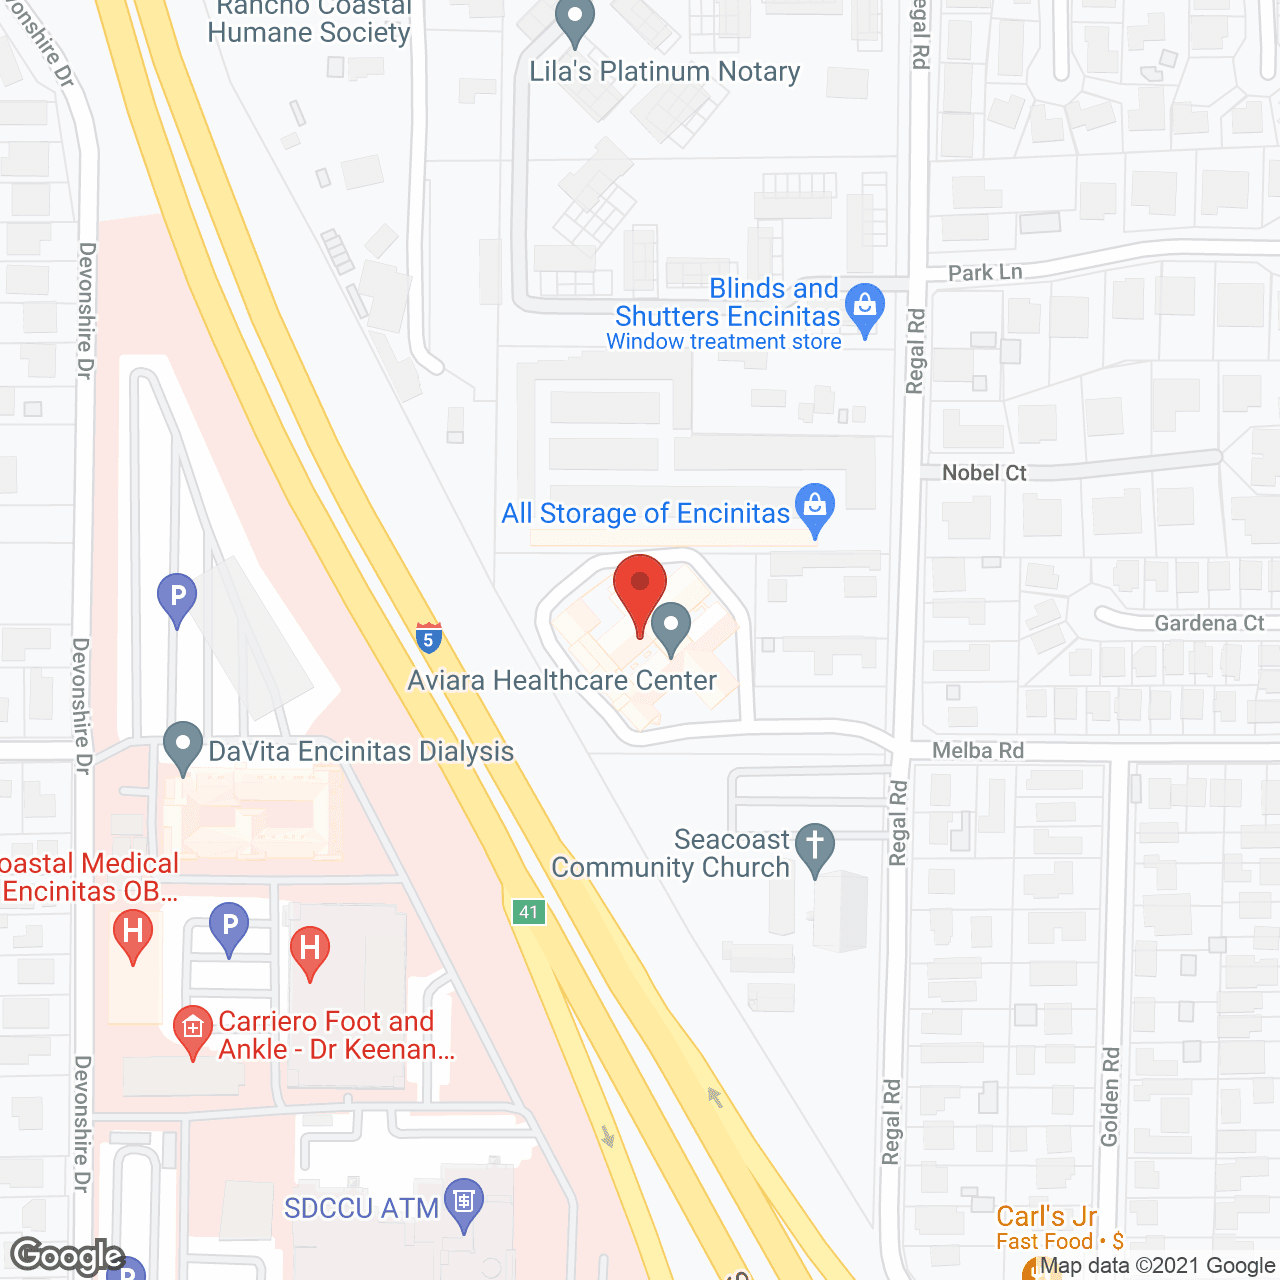 Aviara Healthcare Center in google map